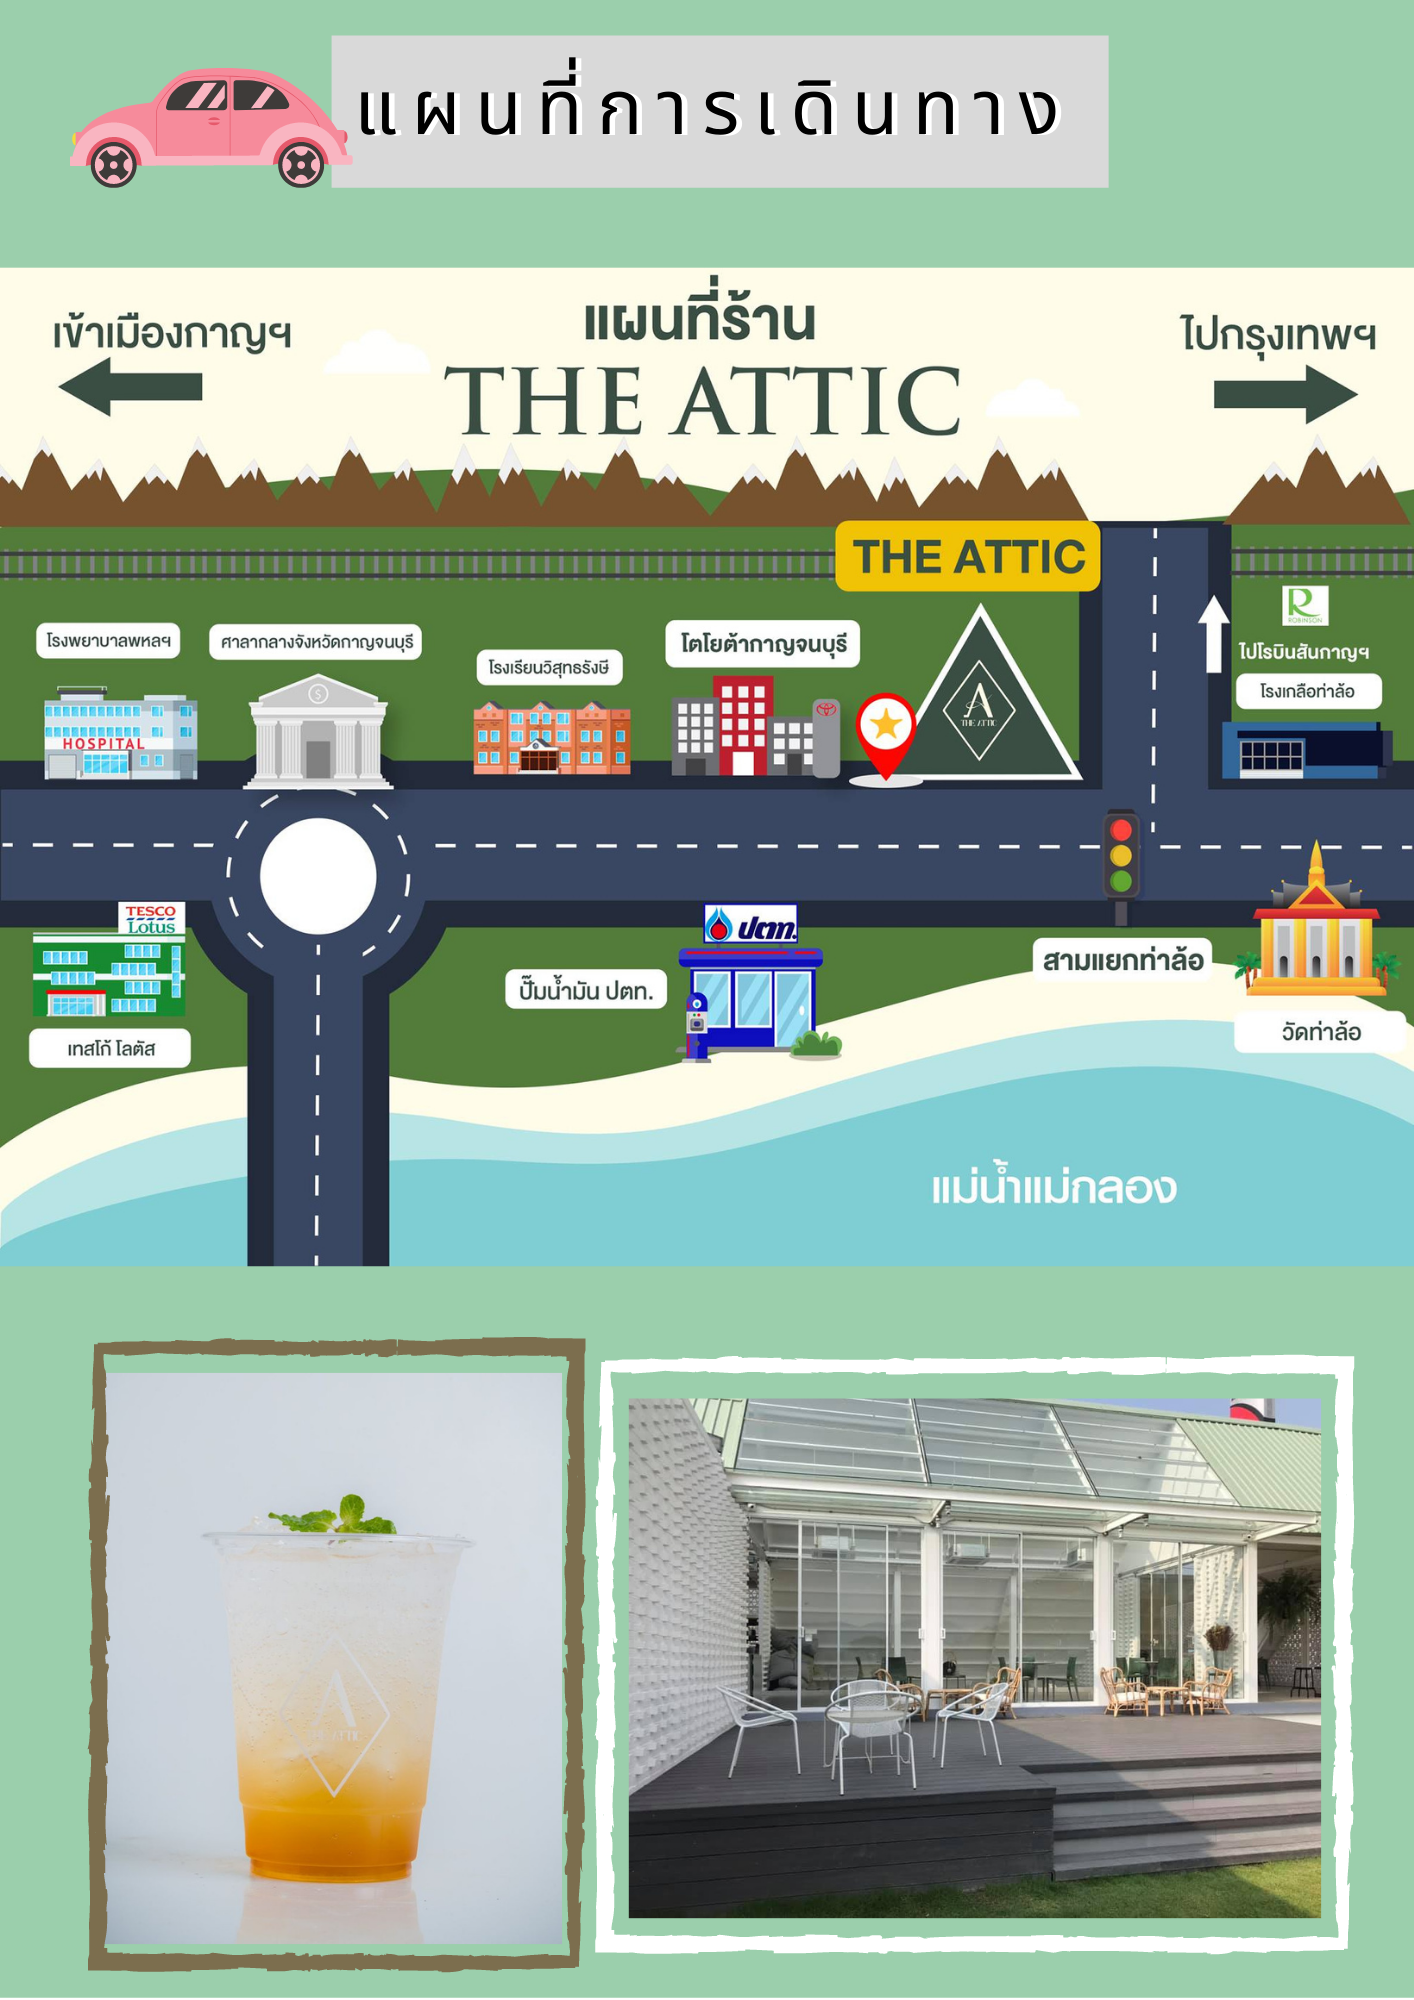 The Attic Cafe กาญจนบุรี